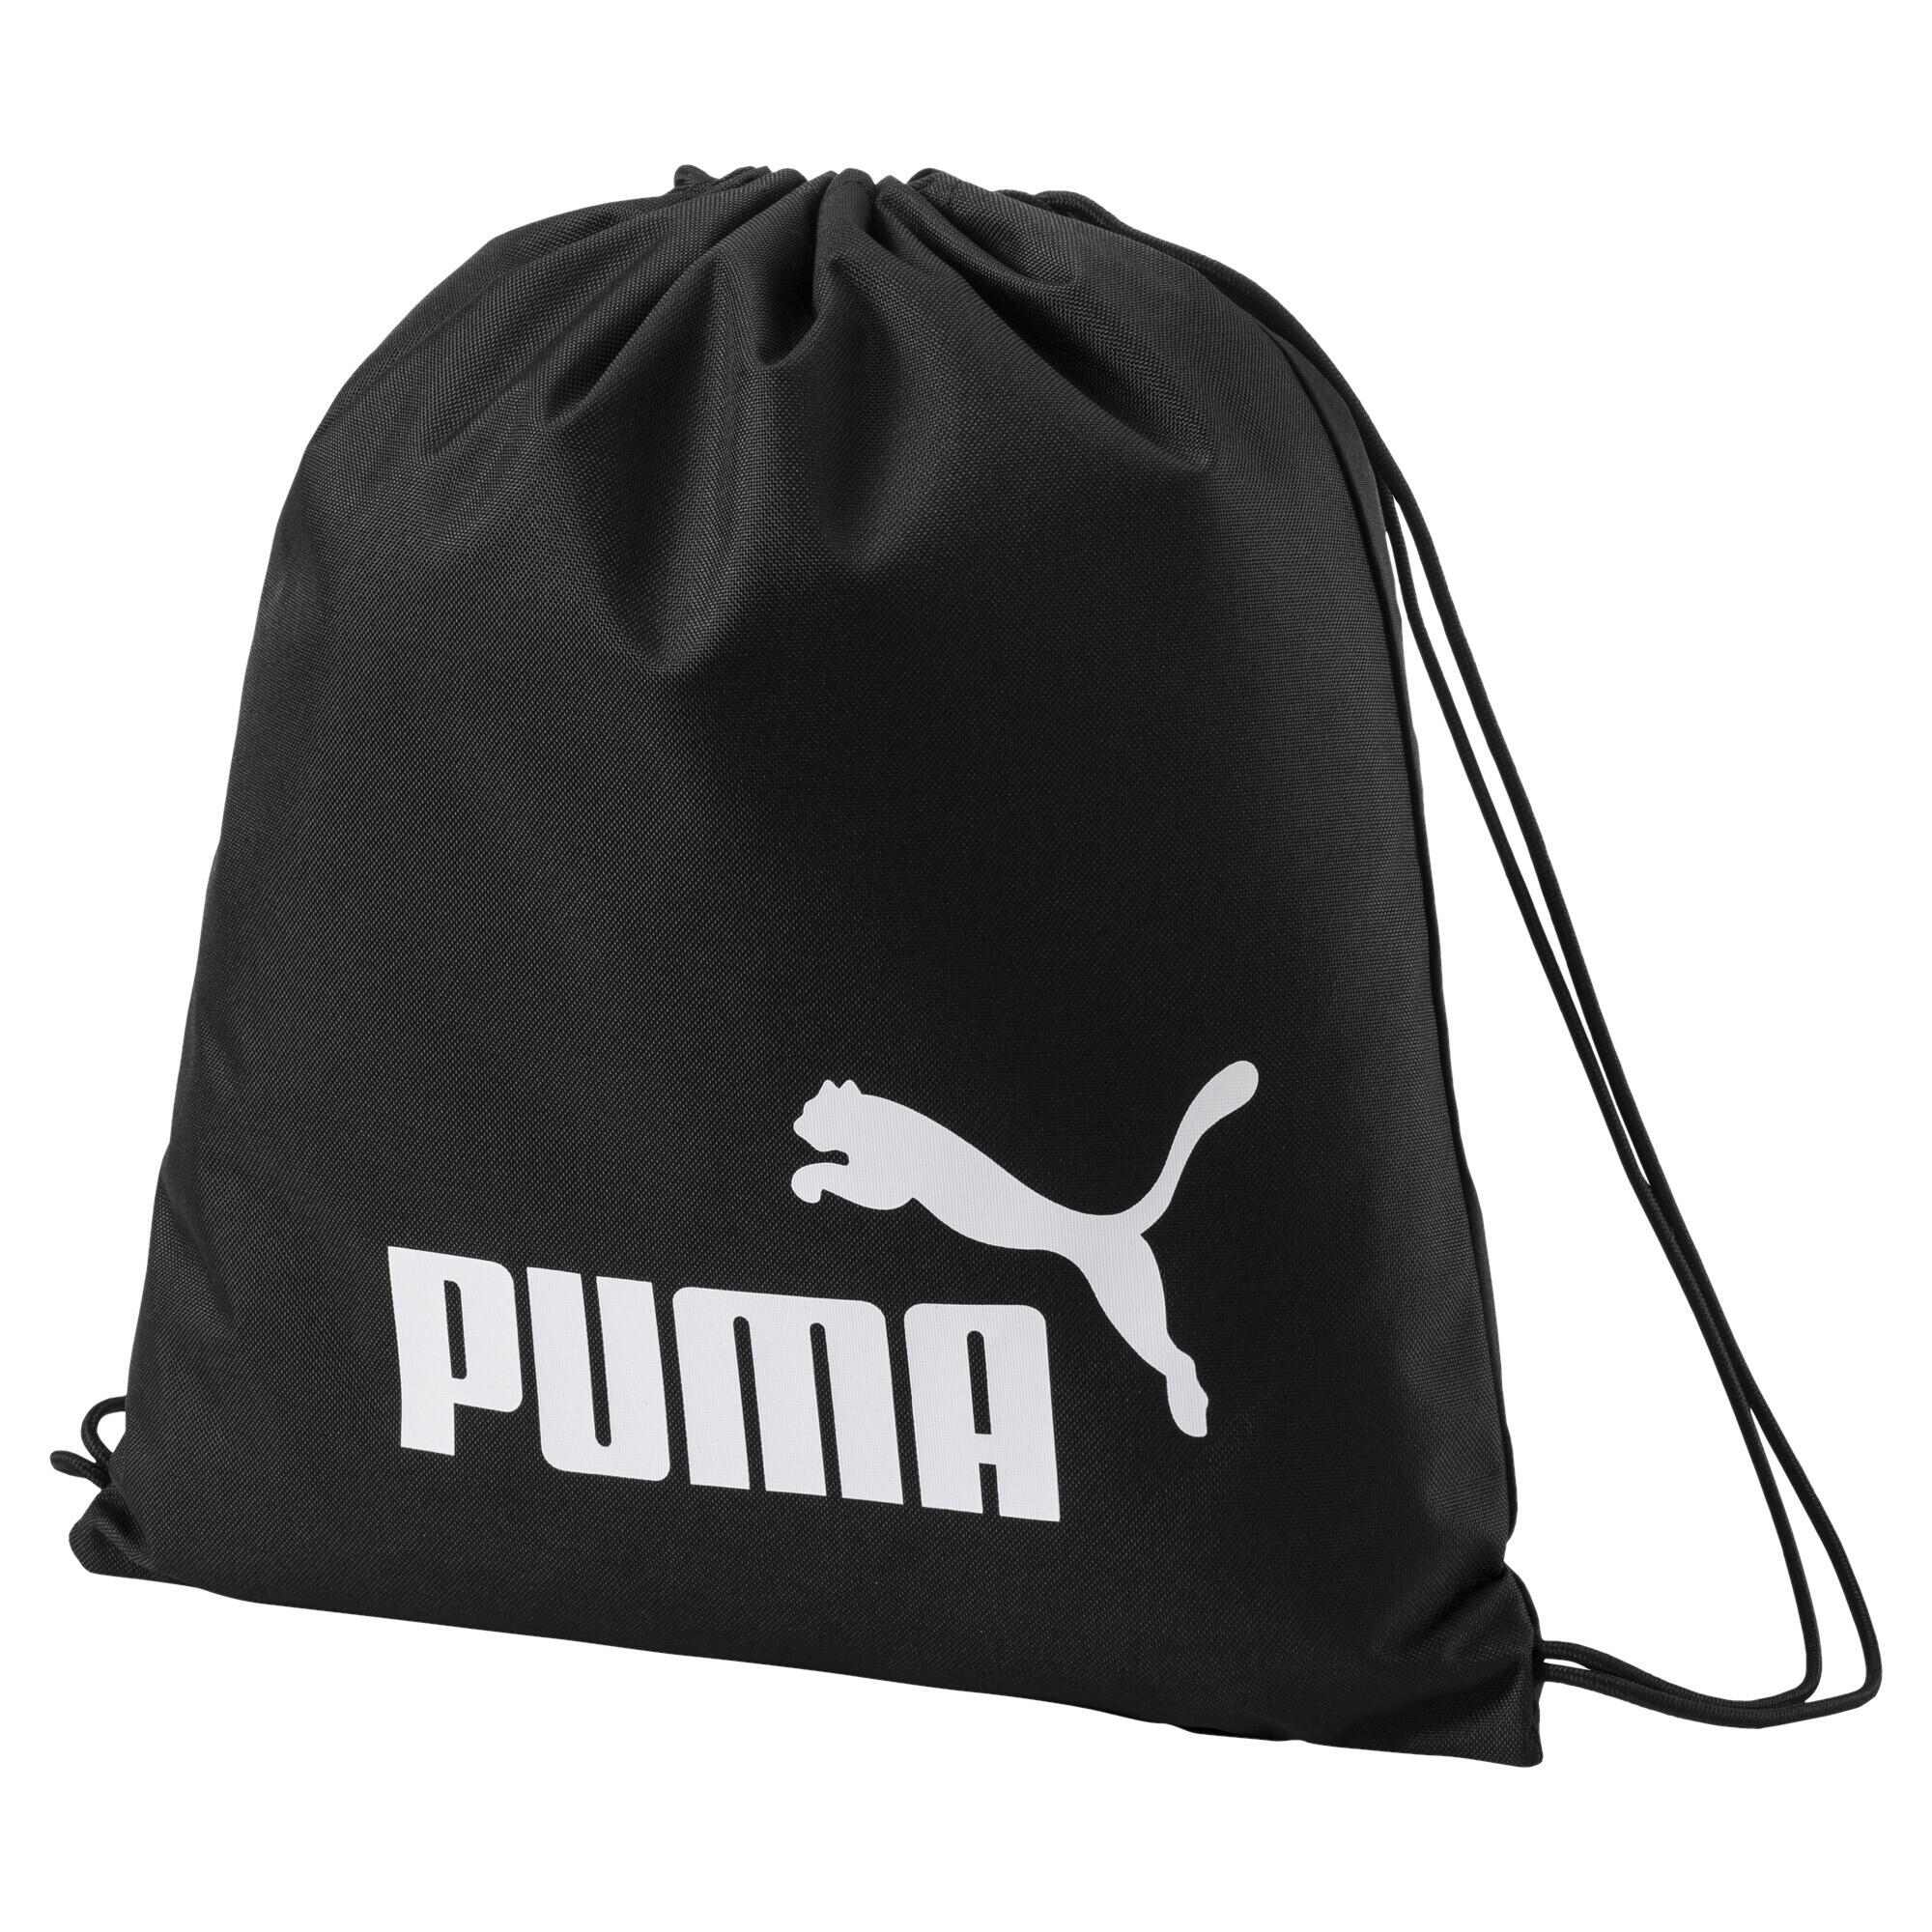 PUMA Unisex Phase Gym Bag - Black 1/2